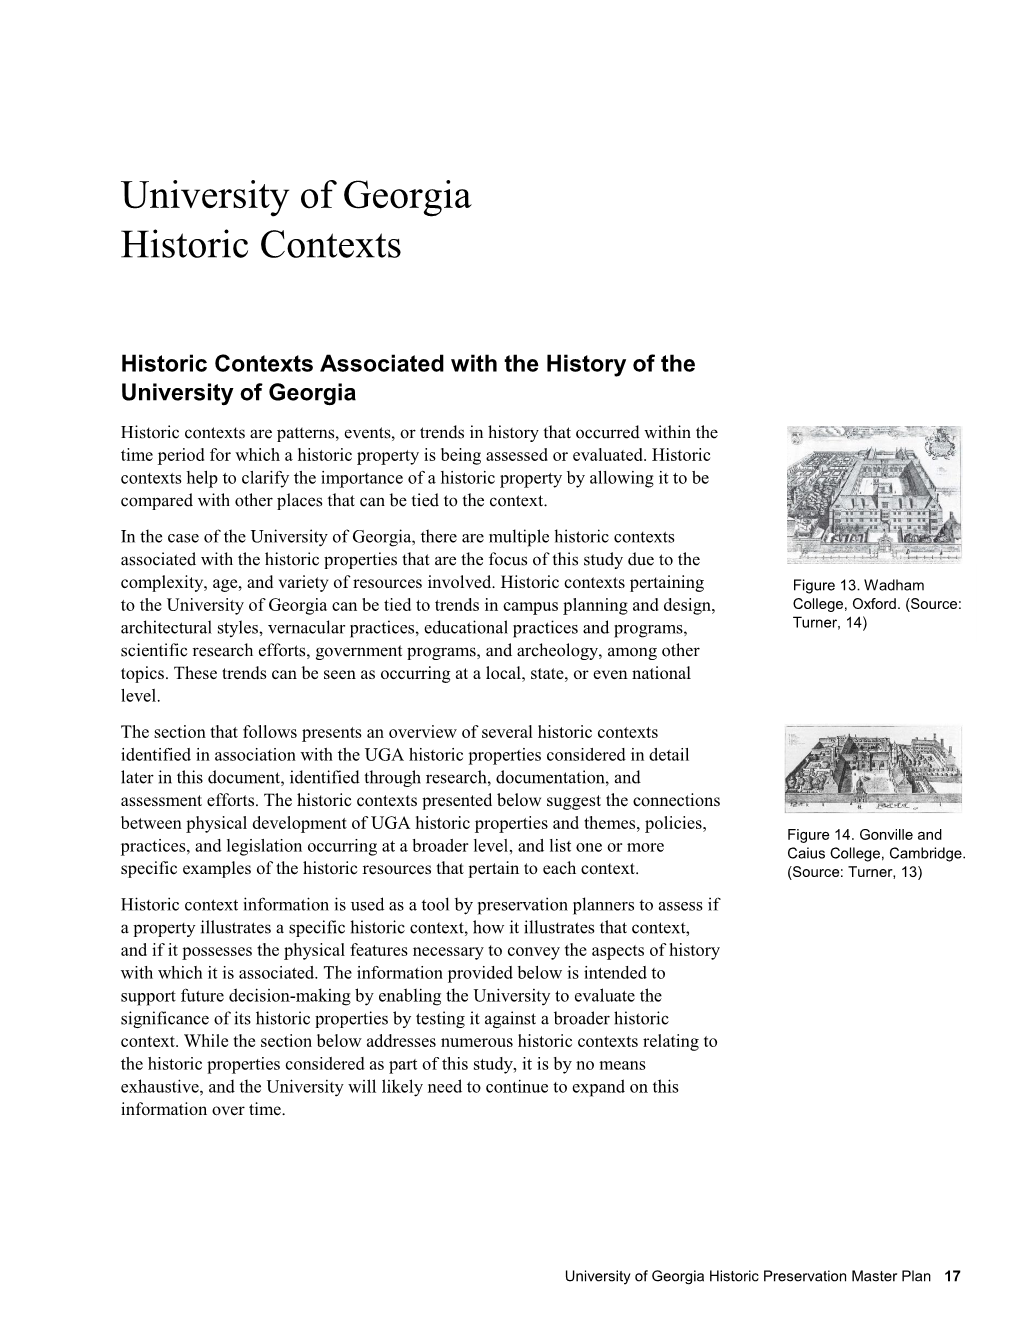 University of Georgia Historic Contexts